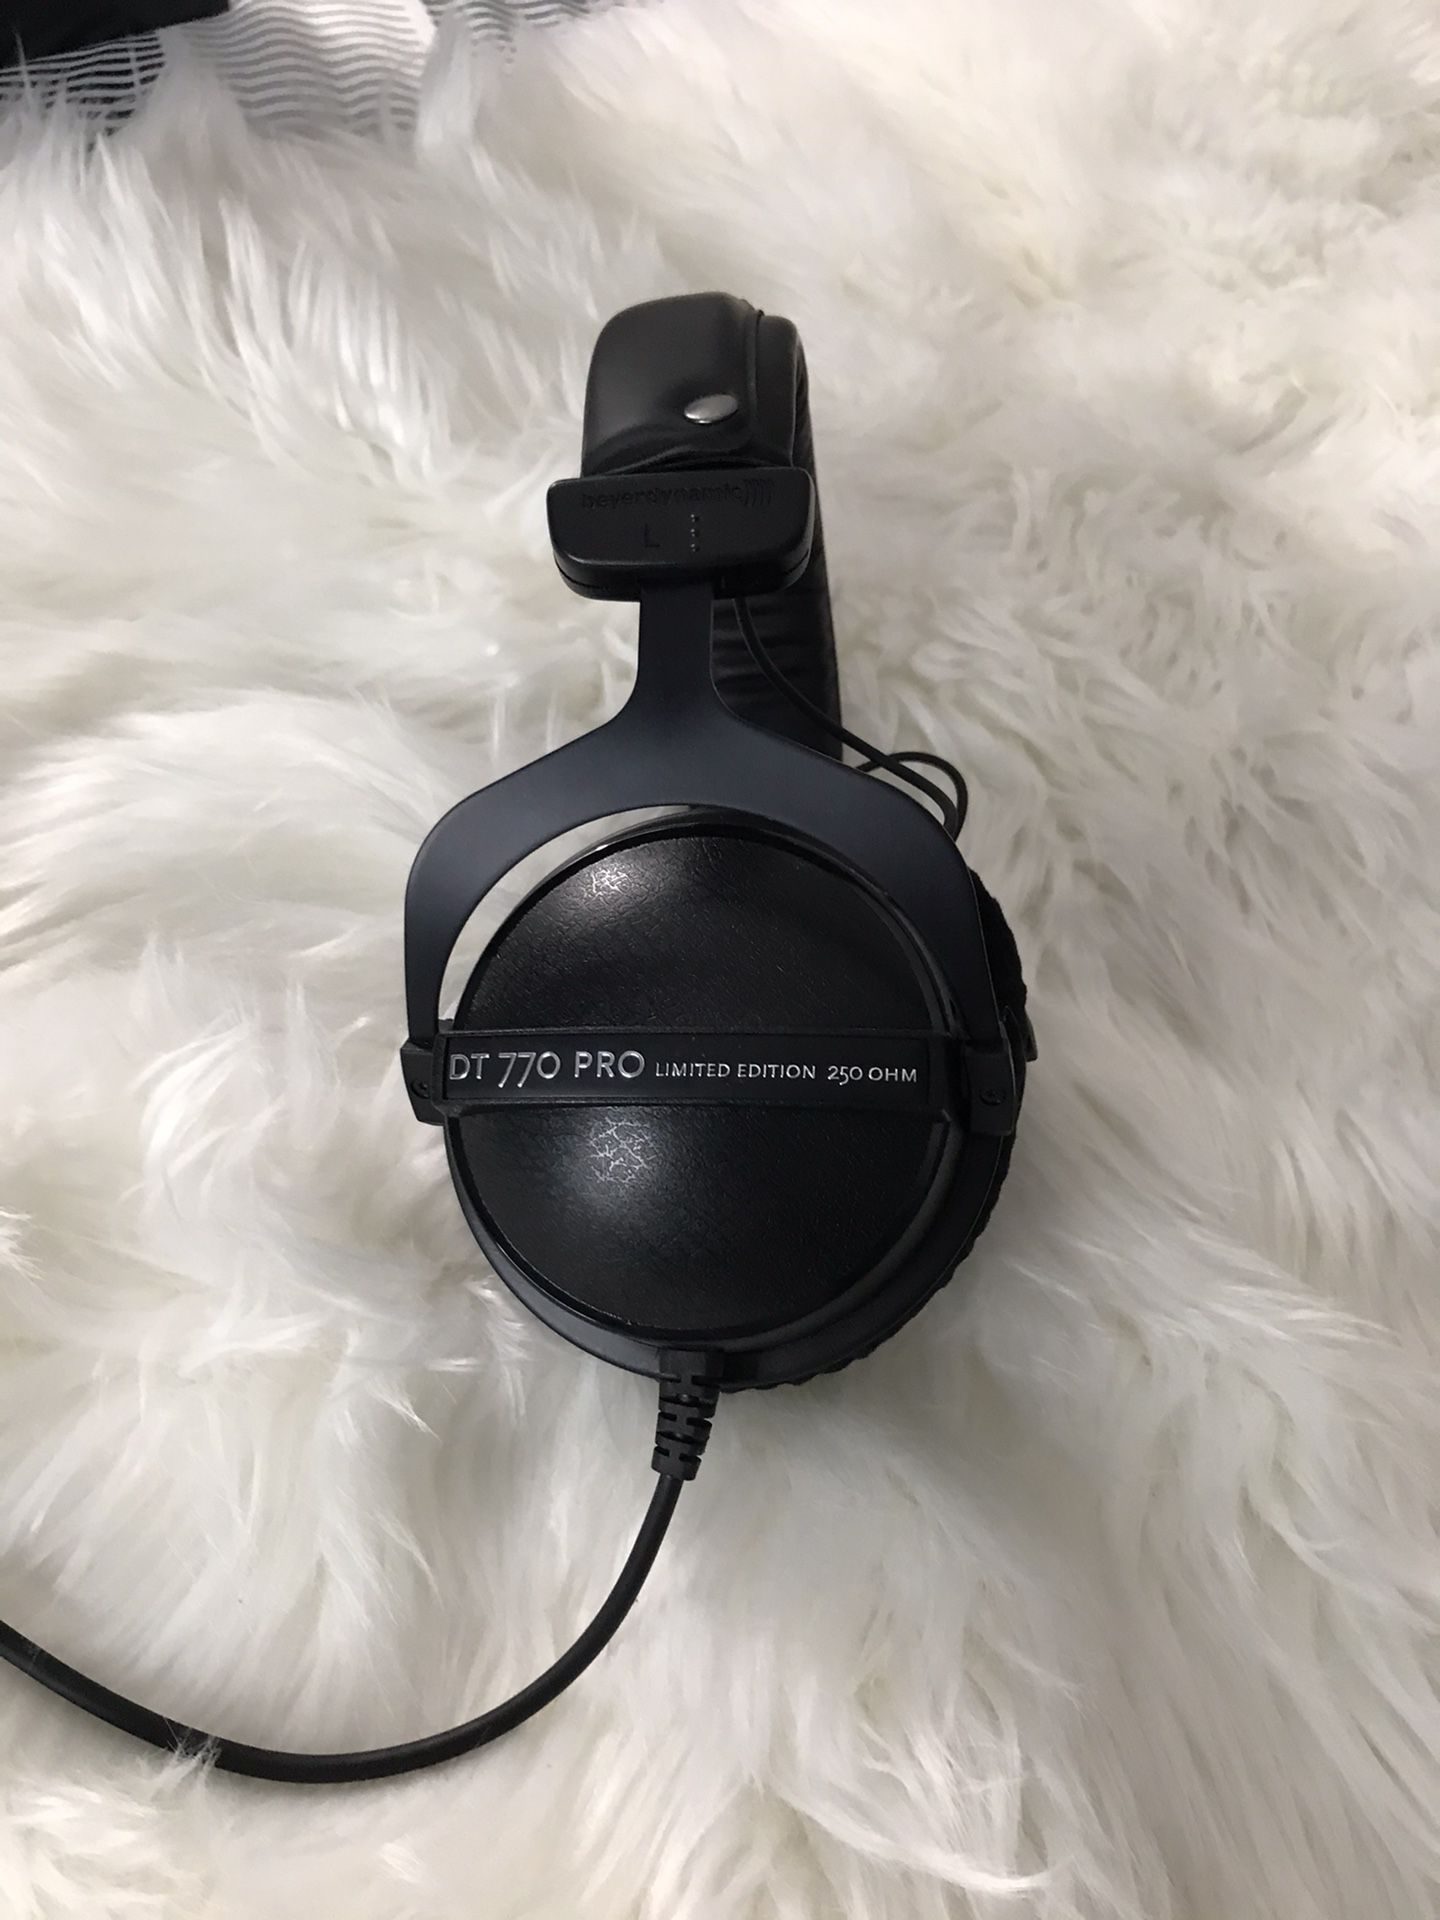 Beyerdynamics DT 770 Pro Limited Edition (Black)